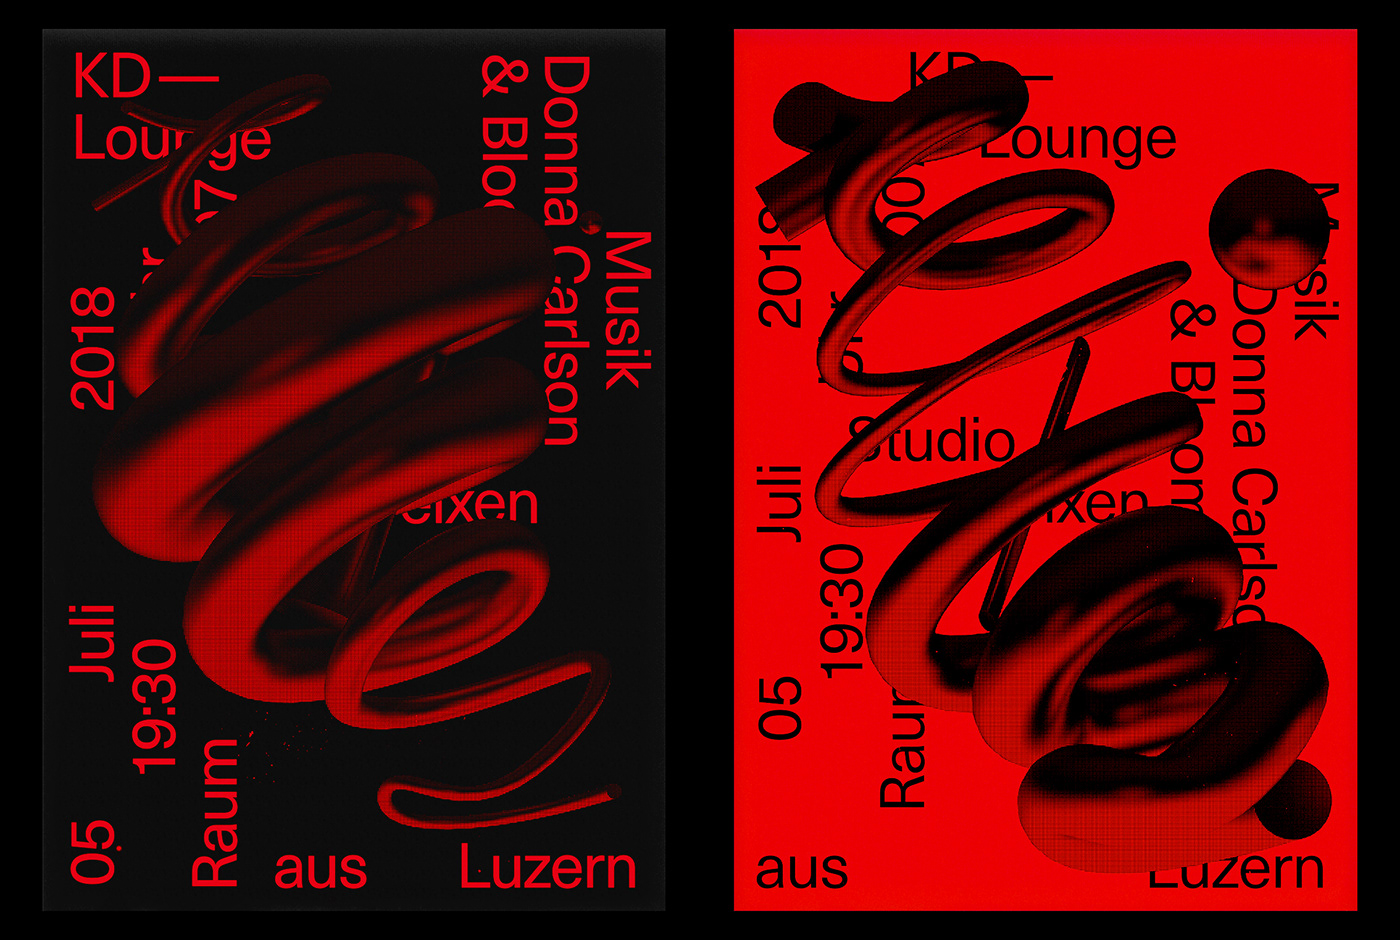 kd-lounge konstanz poster motion design Pascal Botlik Hubertus Design Andrea Grützner kurzgesagt Studio Feixen graphic design 